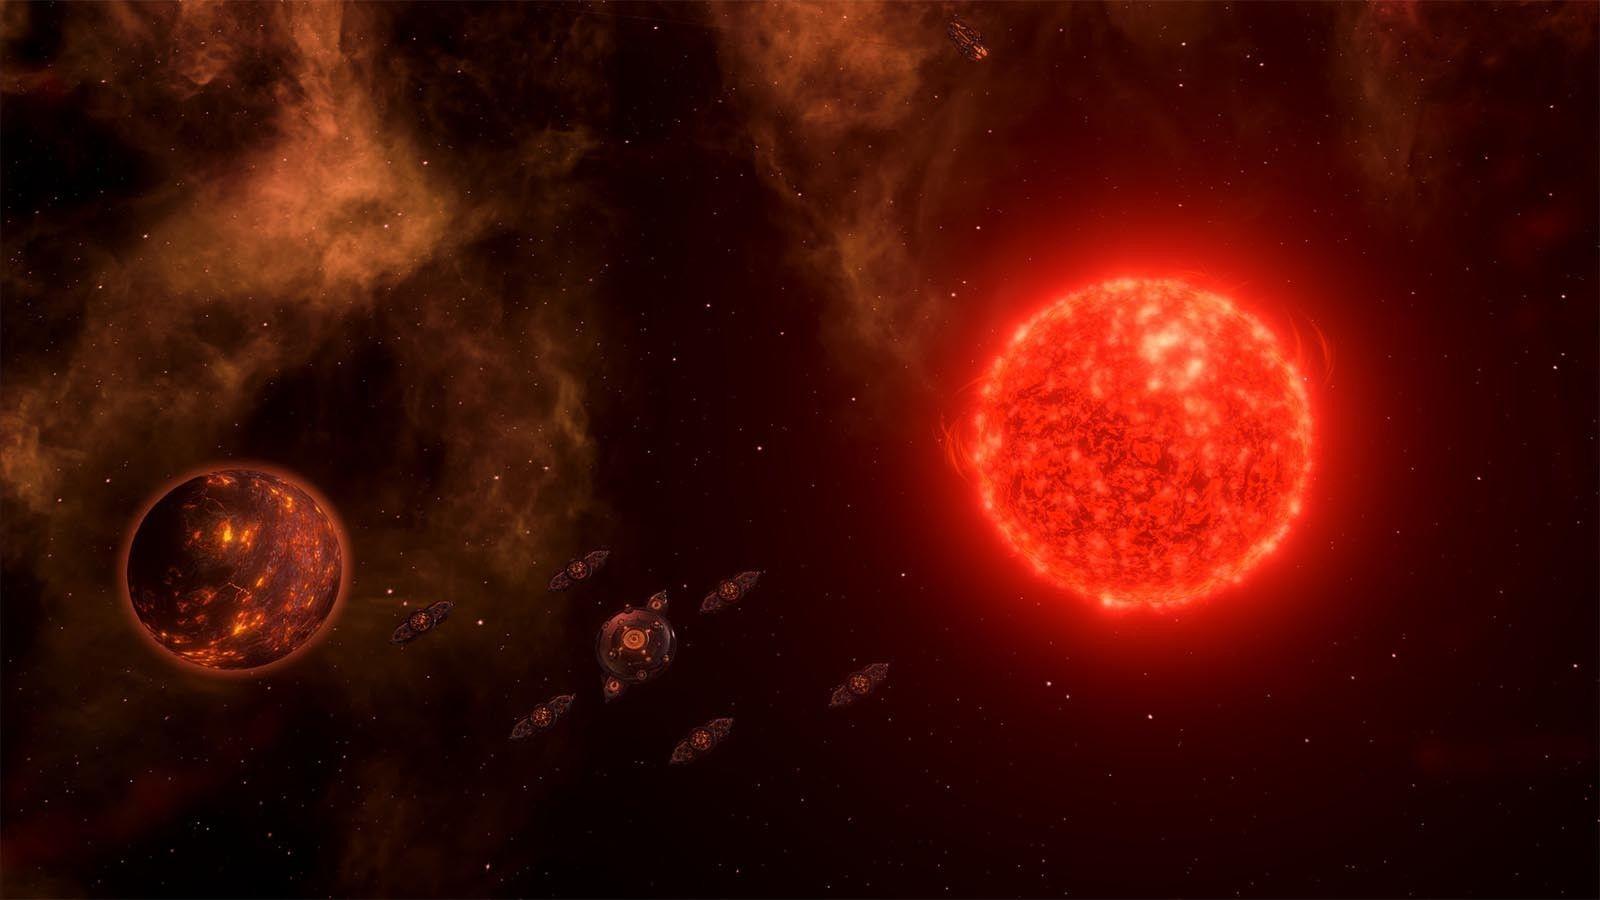 Stellaris: Apocalypse [Steam CD Key] for PC, Mac and Linux